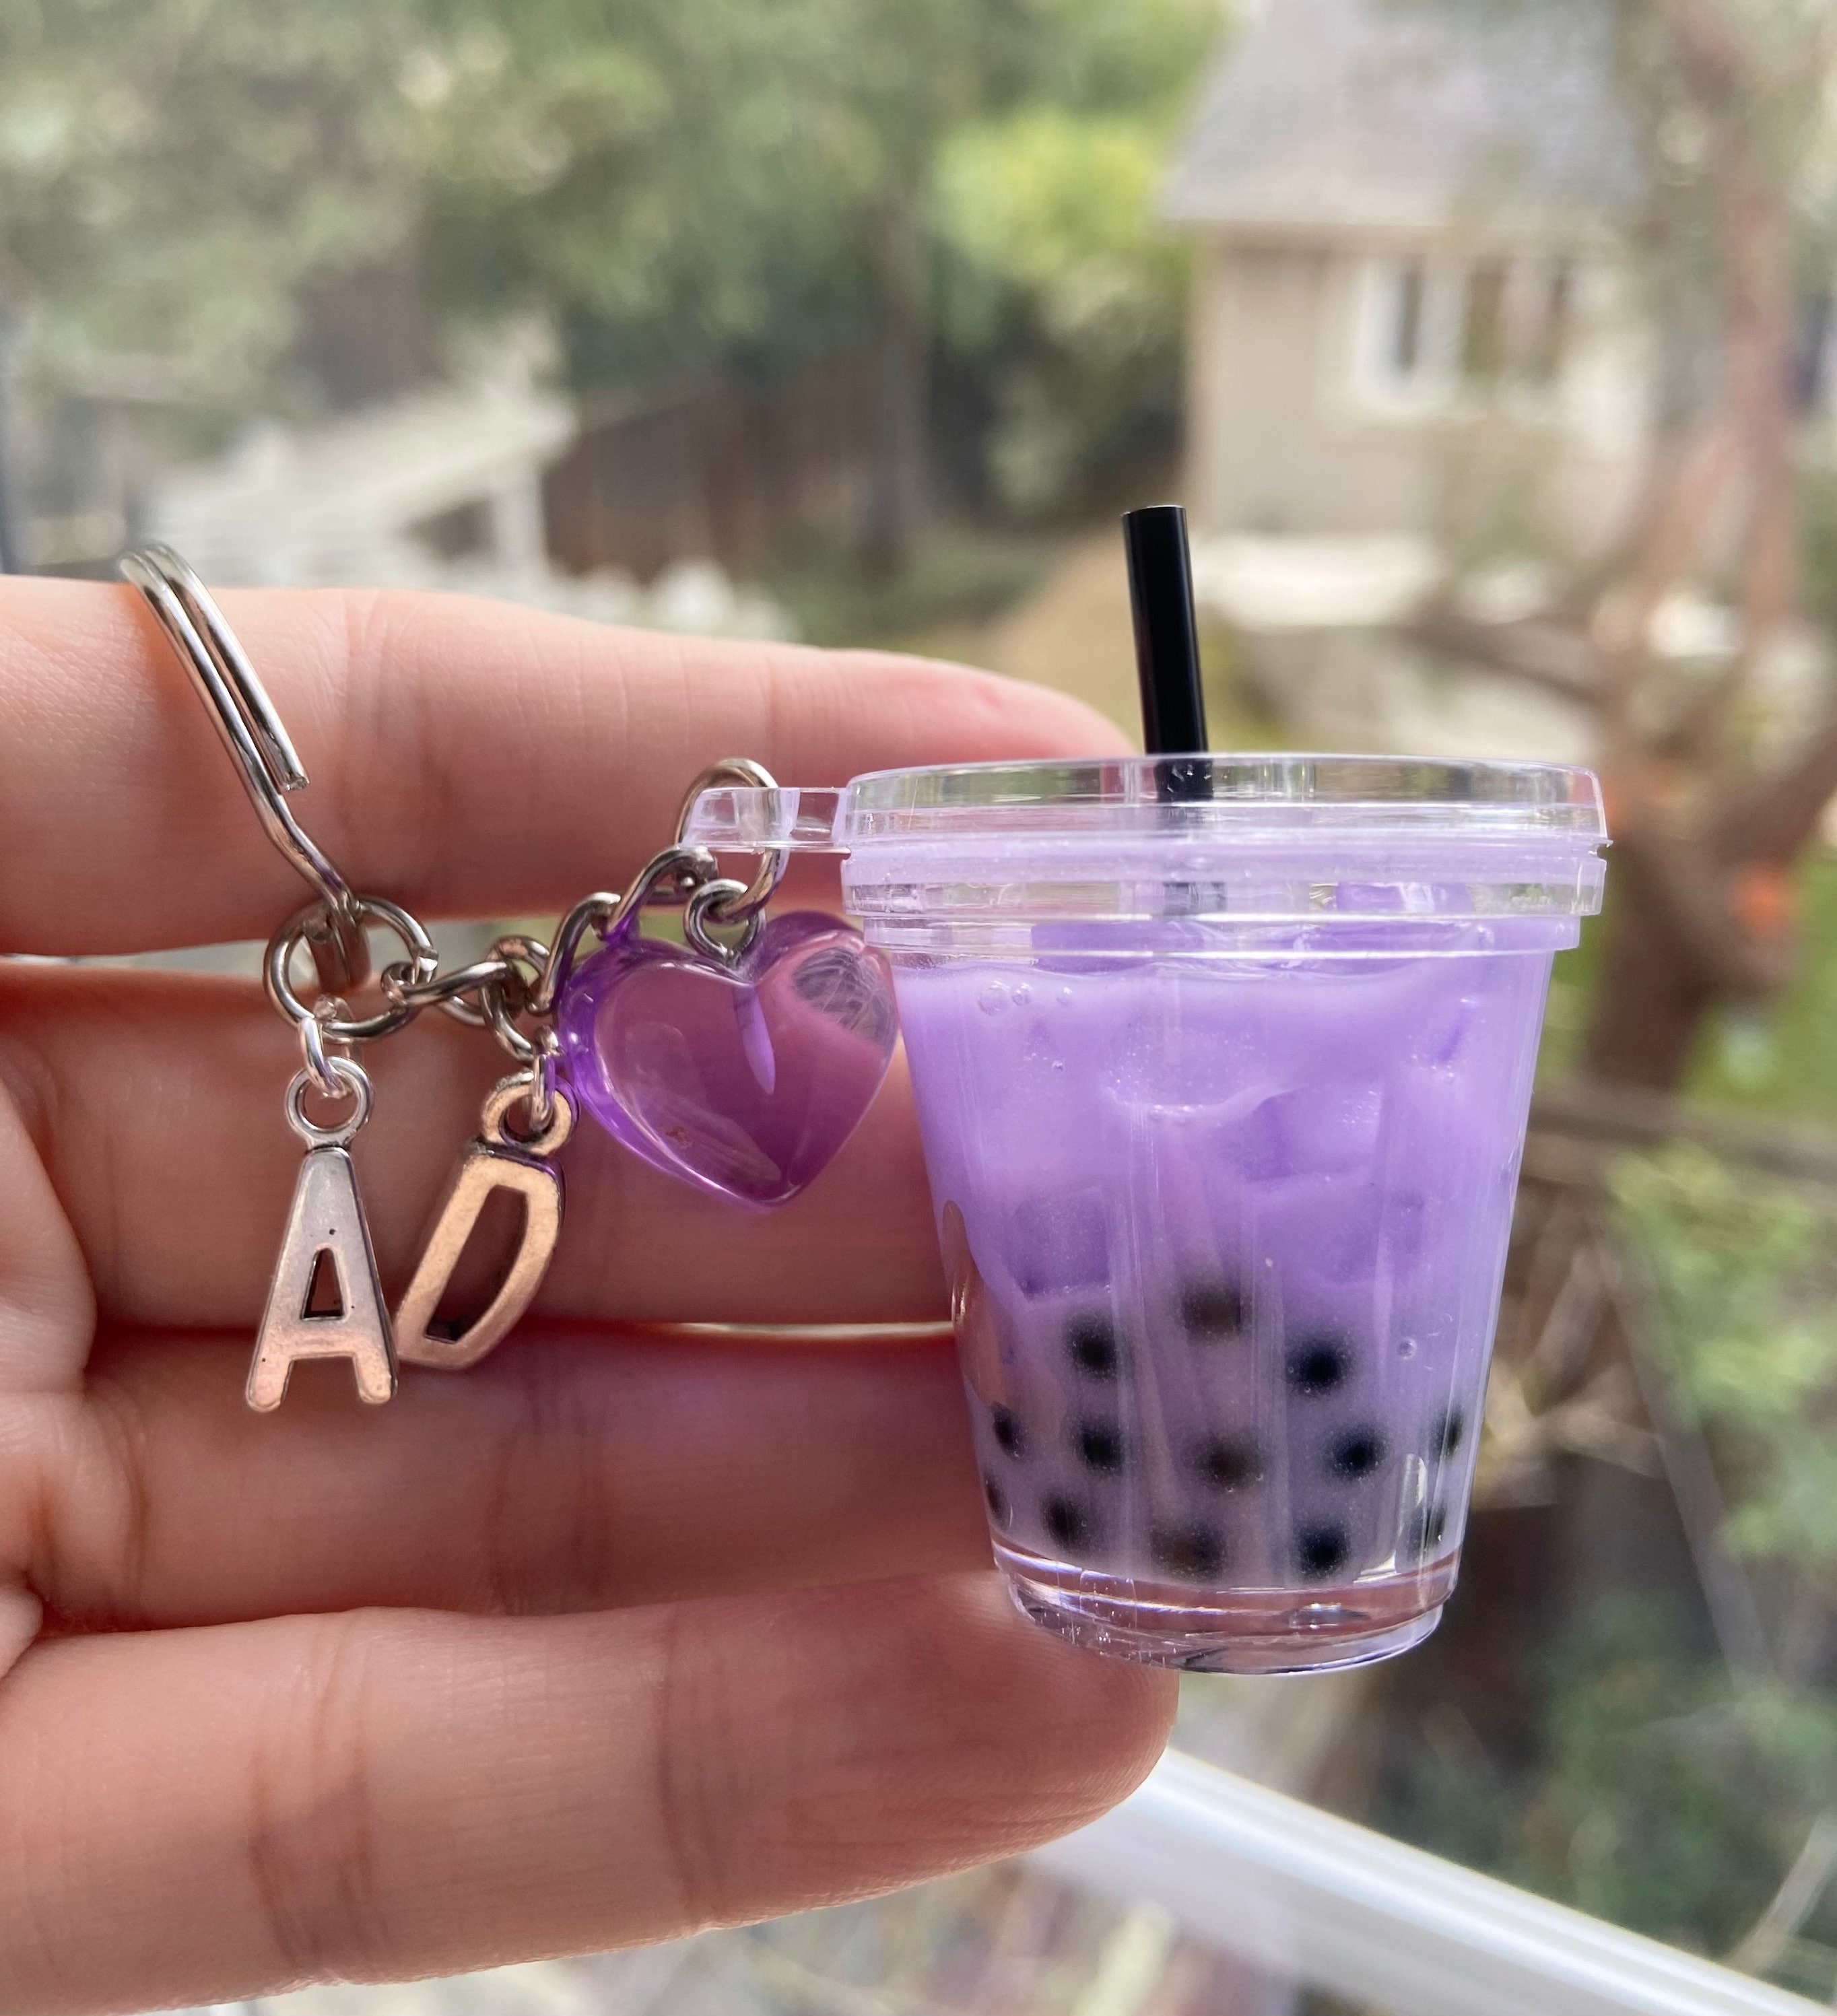 Miniature Boba Tea Cup, Dollhouse Frappuccino Cup, Kawaii Bubble Tea, MiniatureSweet, Kawaii Resin Crafts, Decoden Cabochons Supplies